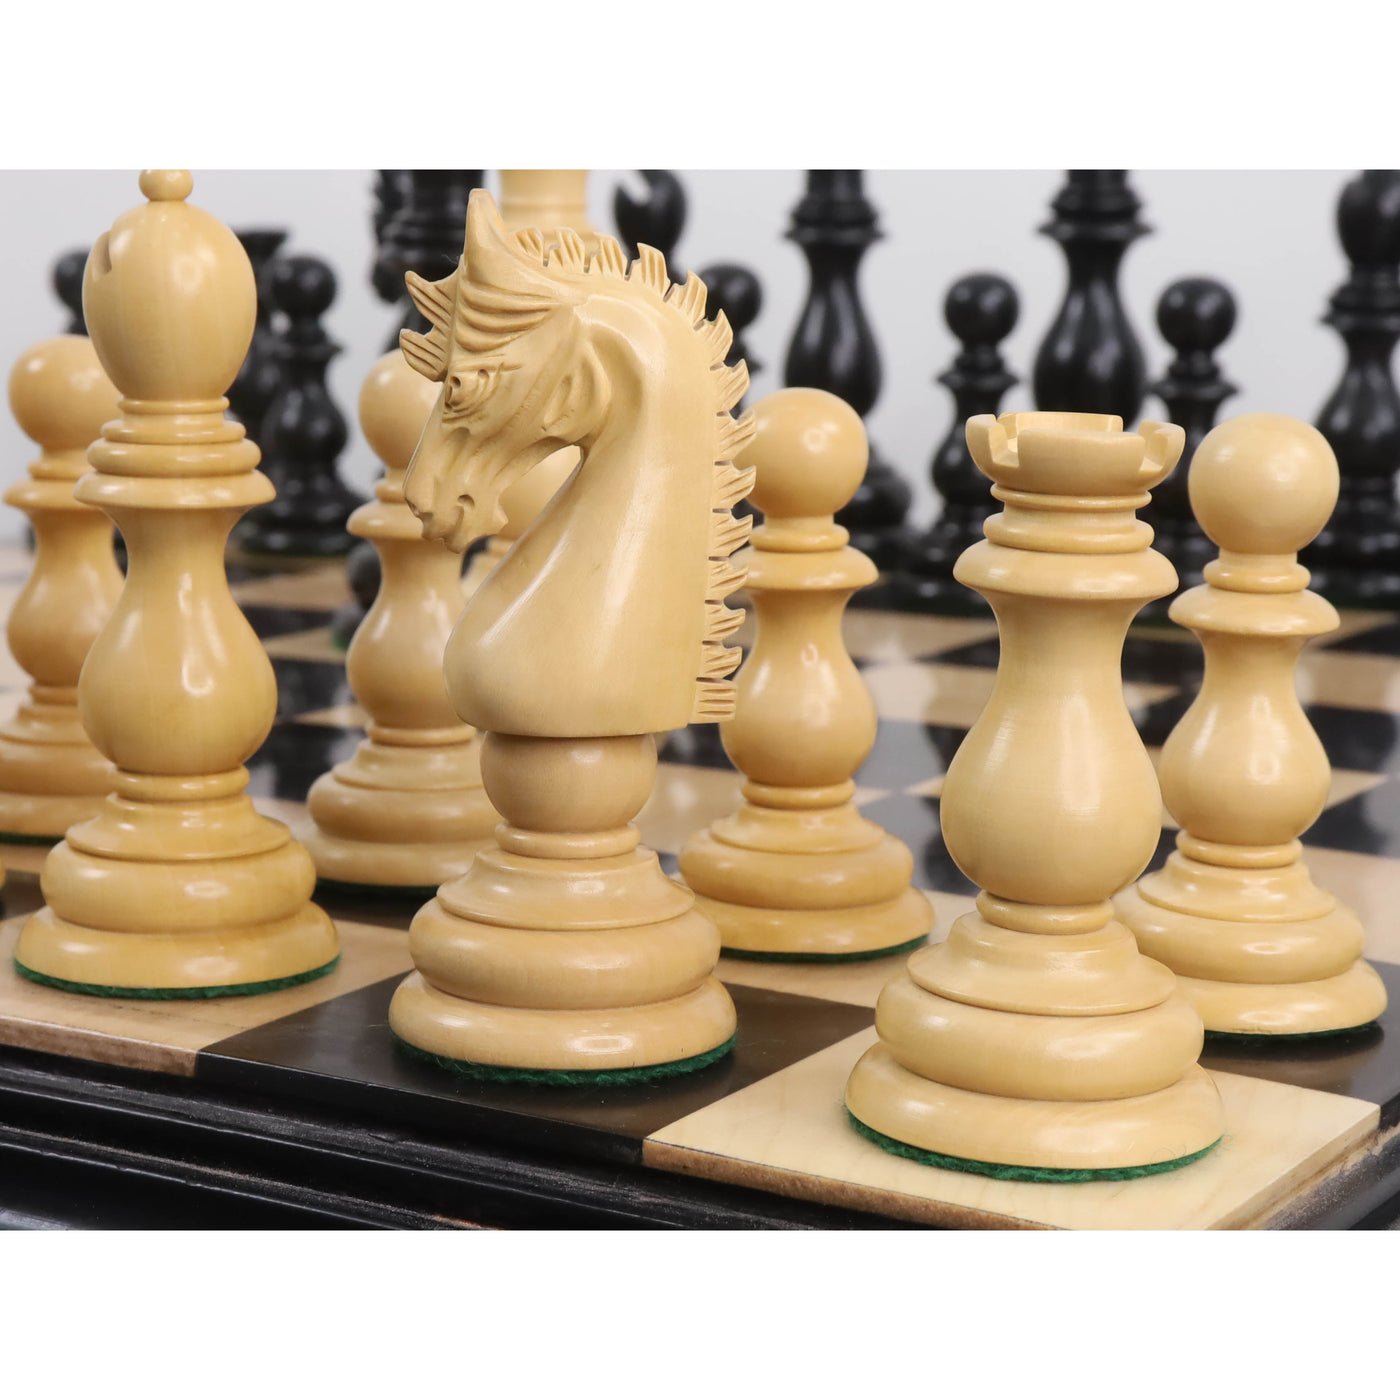 4.6" Medallion Luxury Staunton Chess Set - Chess Pieces Only - Triple Weight Ebony Wood